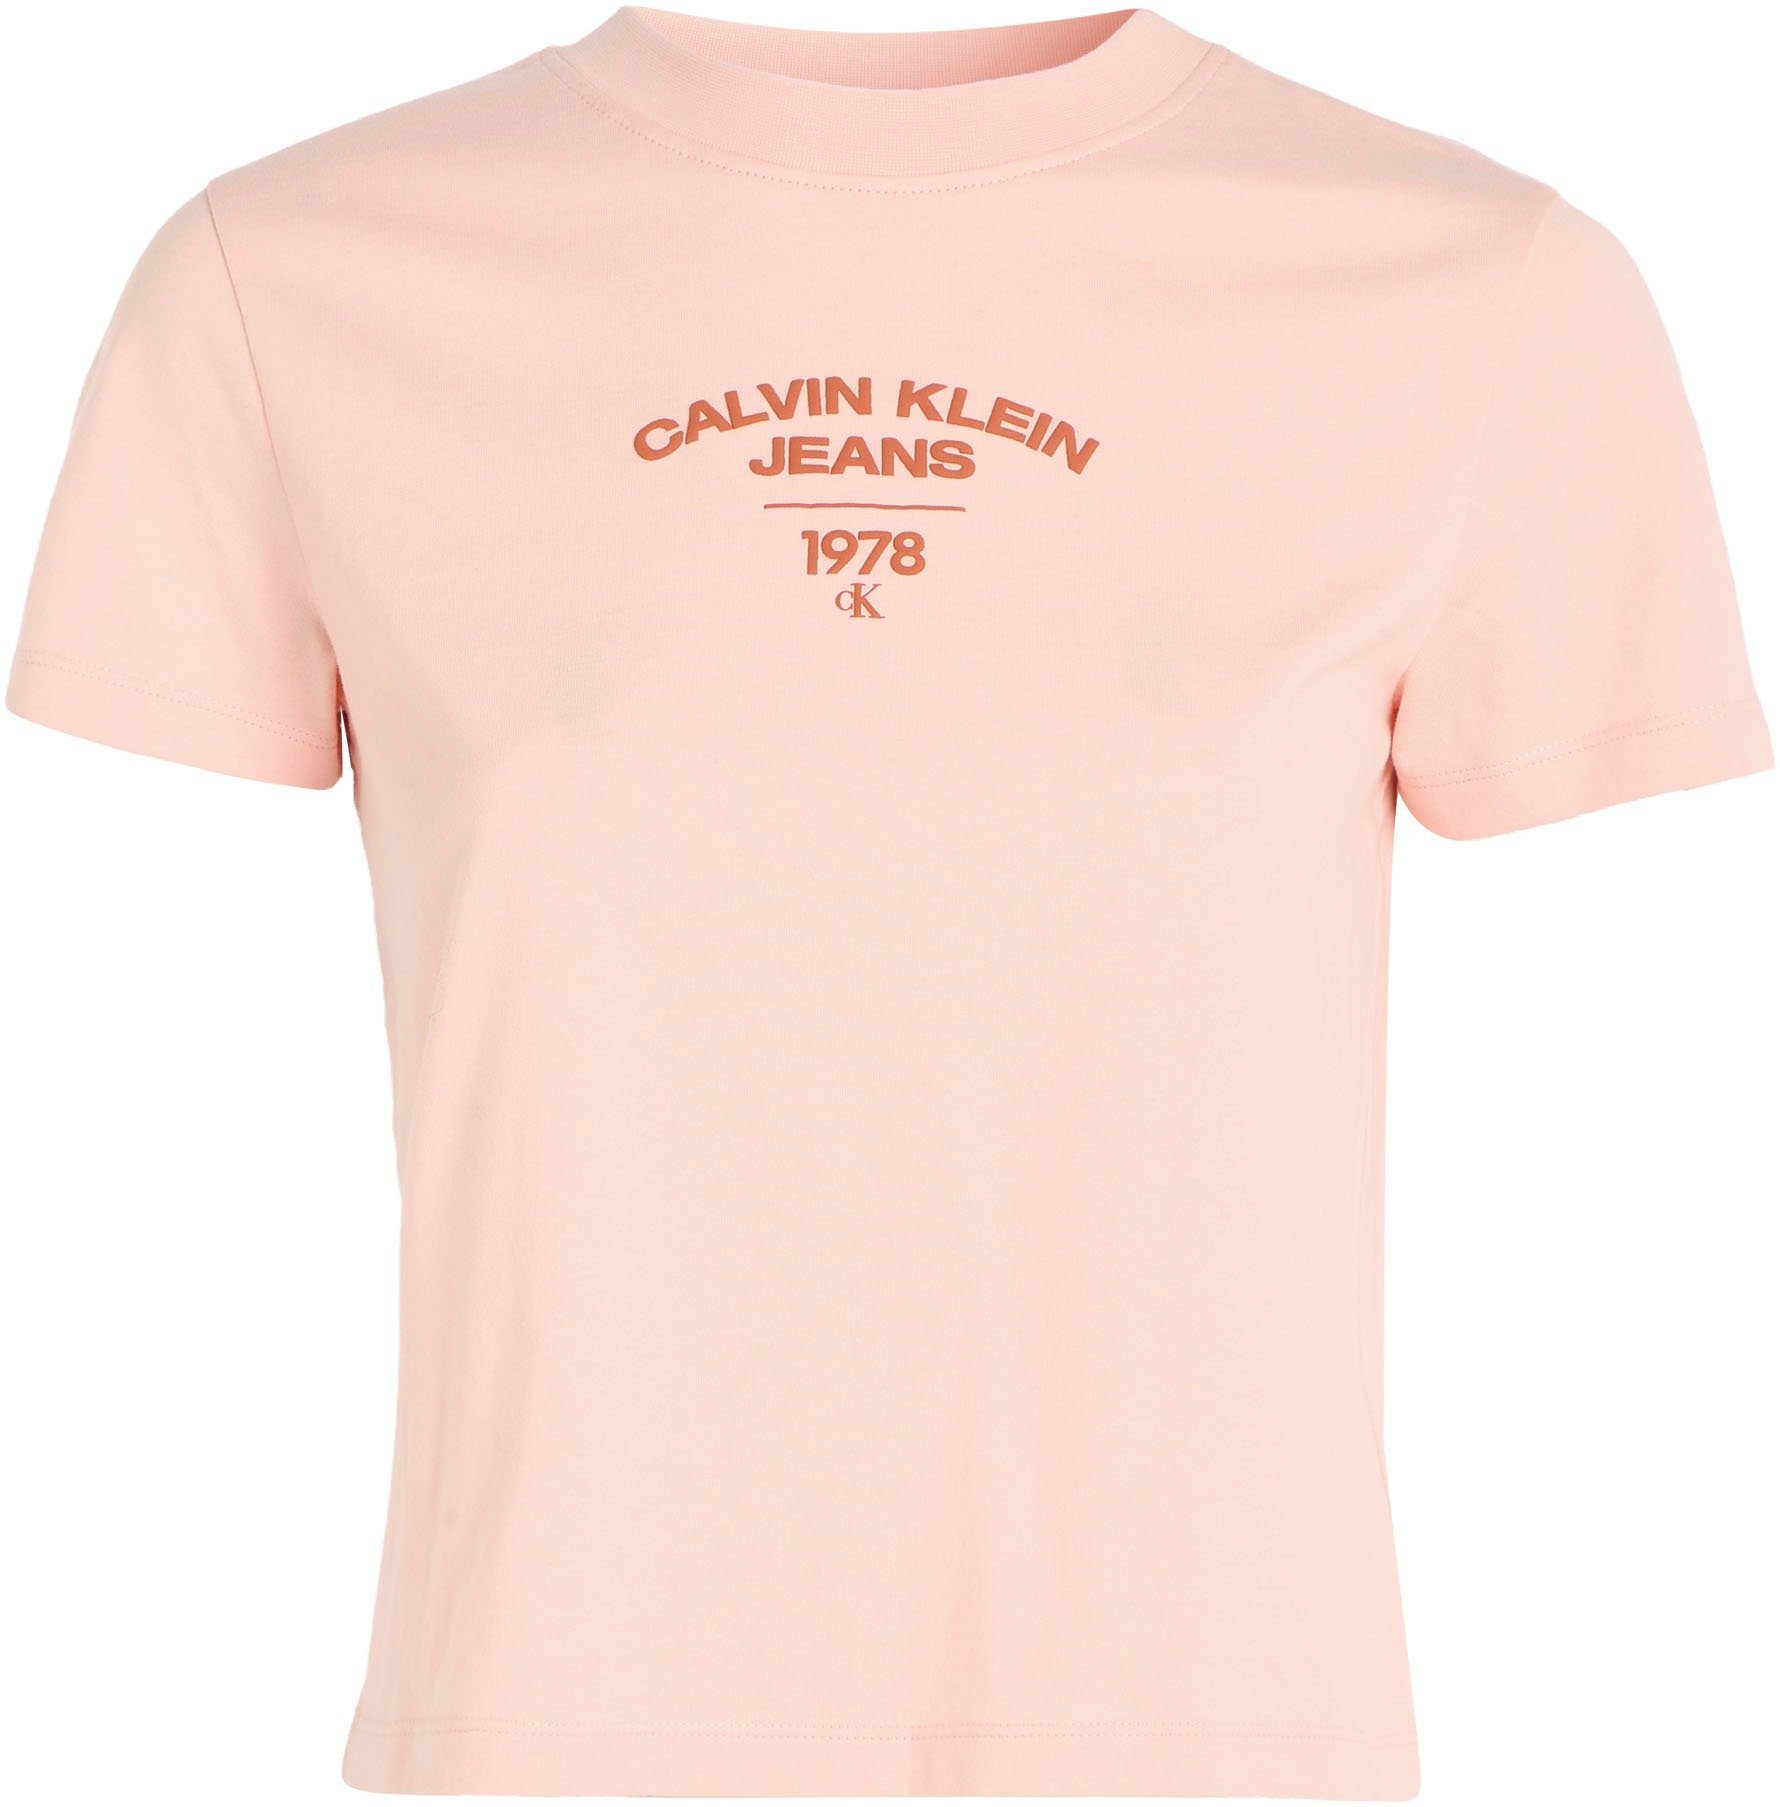 Calvin Klein Jeans TEE VARSITY Blossom T-Shirt BABY Faint LOGO